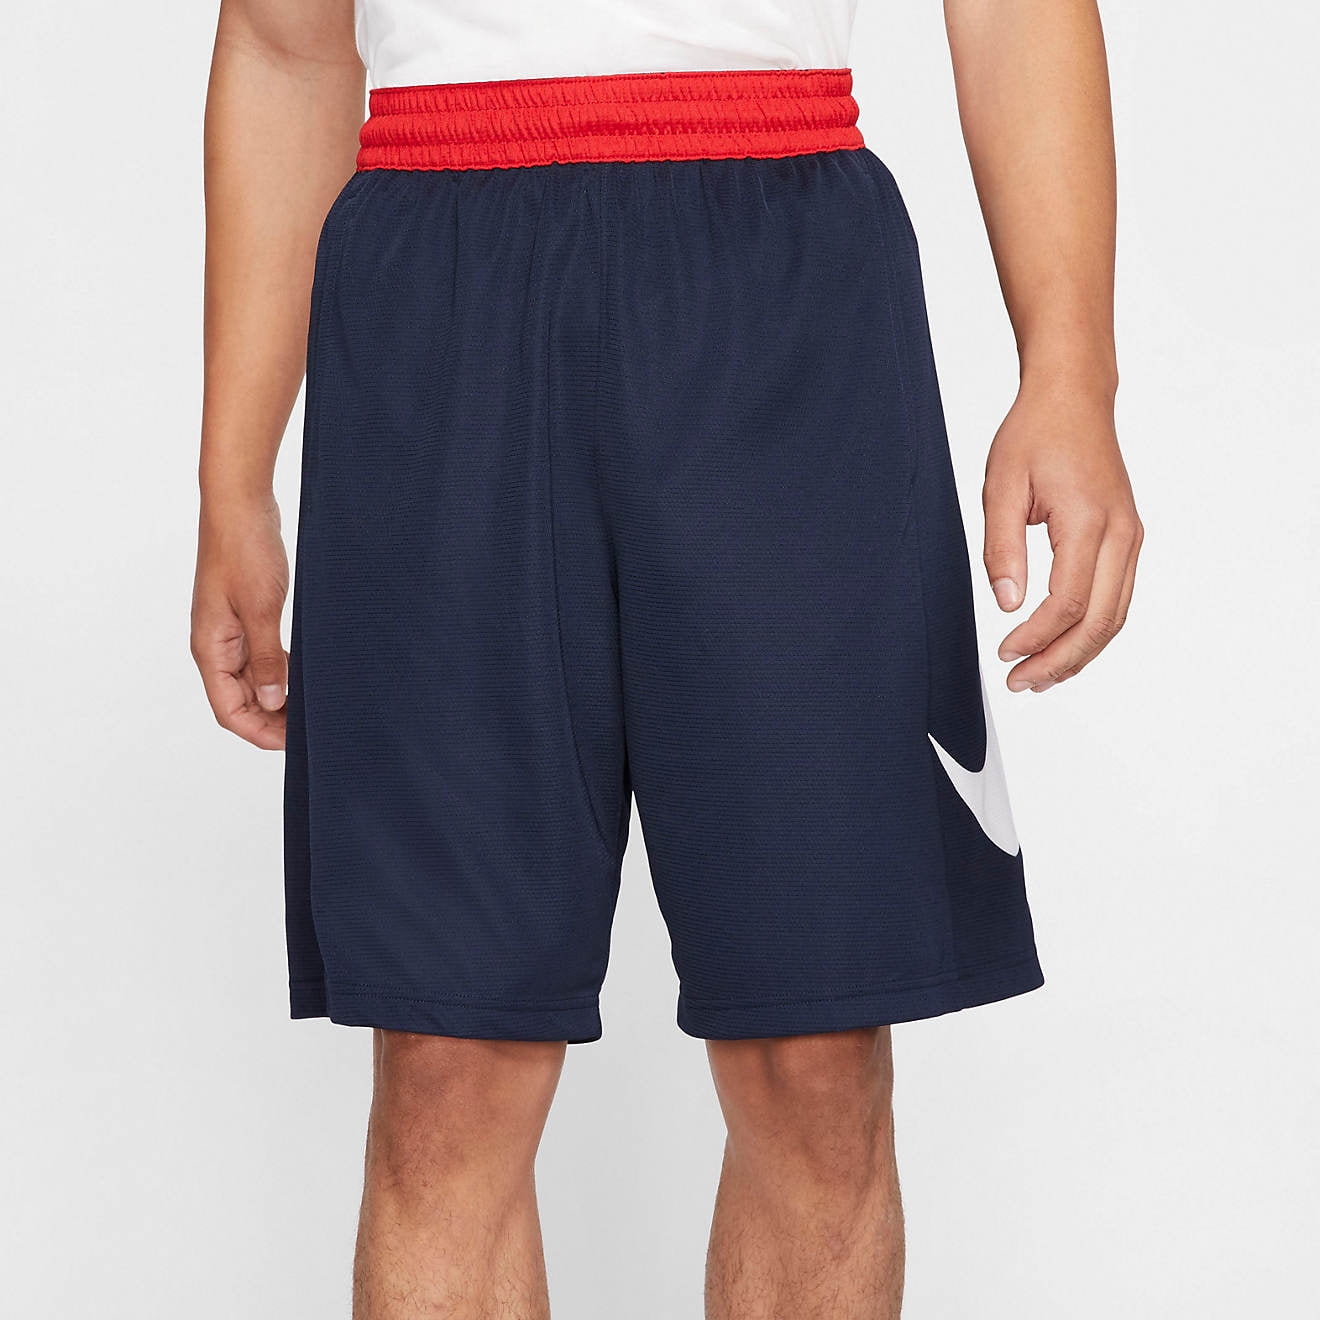 Nike Men's HBR Basketball Shorts - Walmart.com